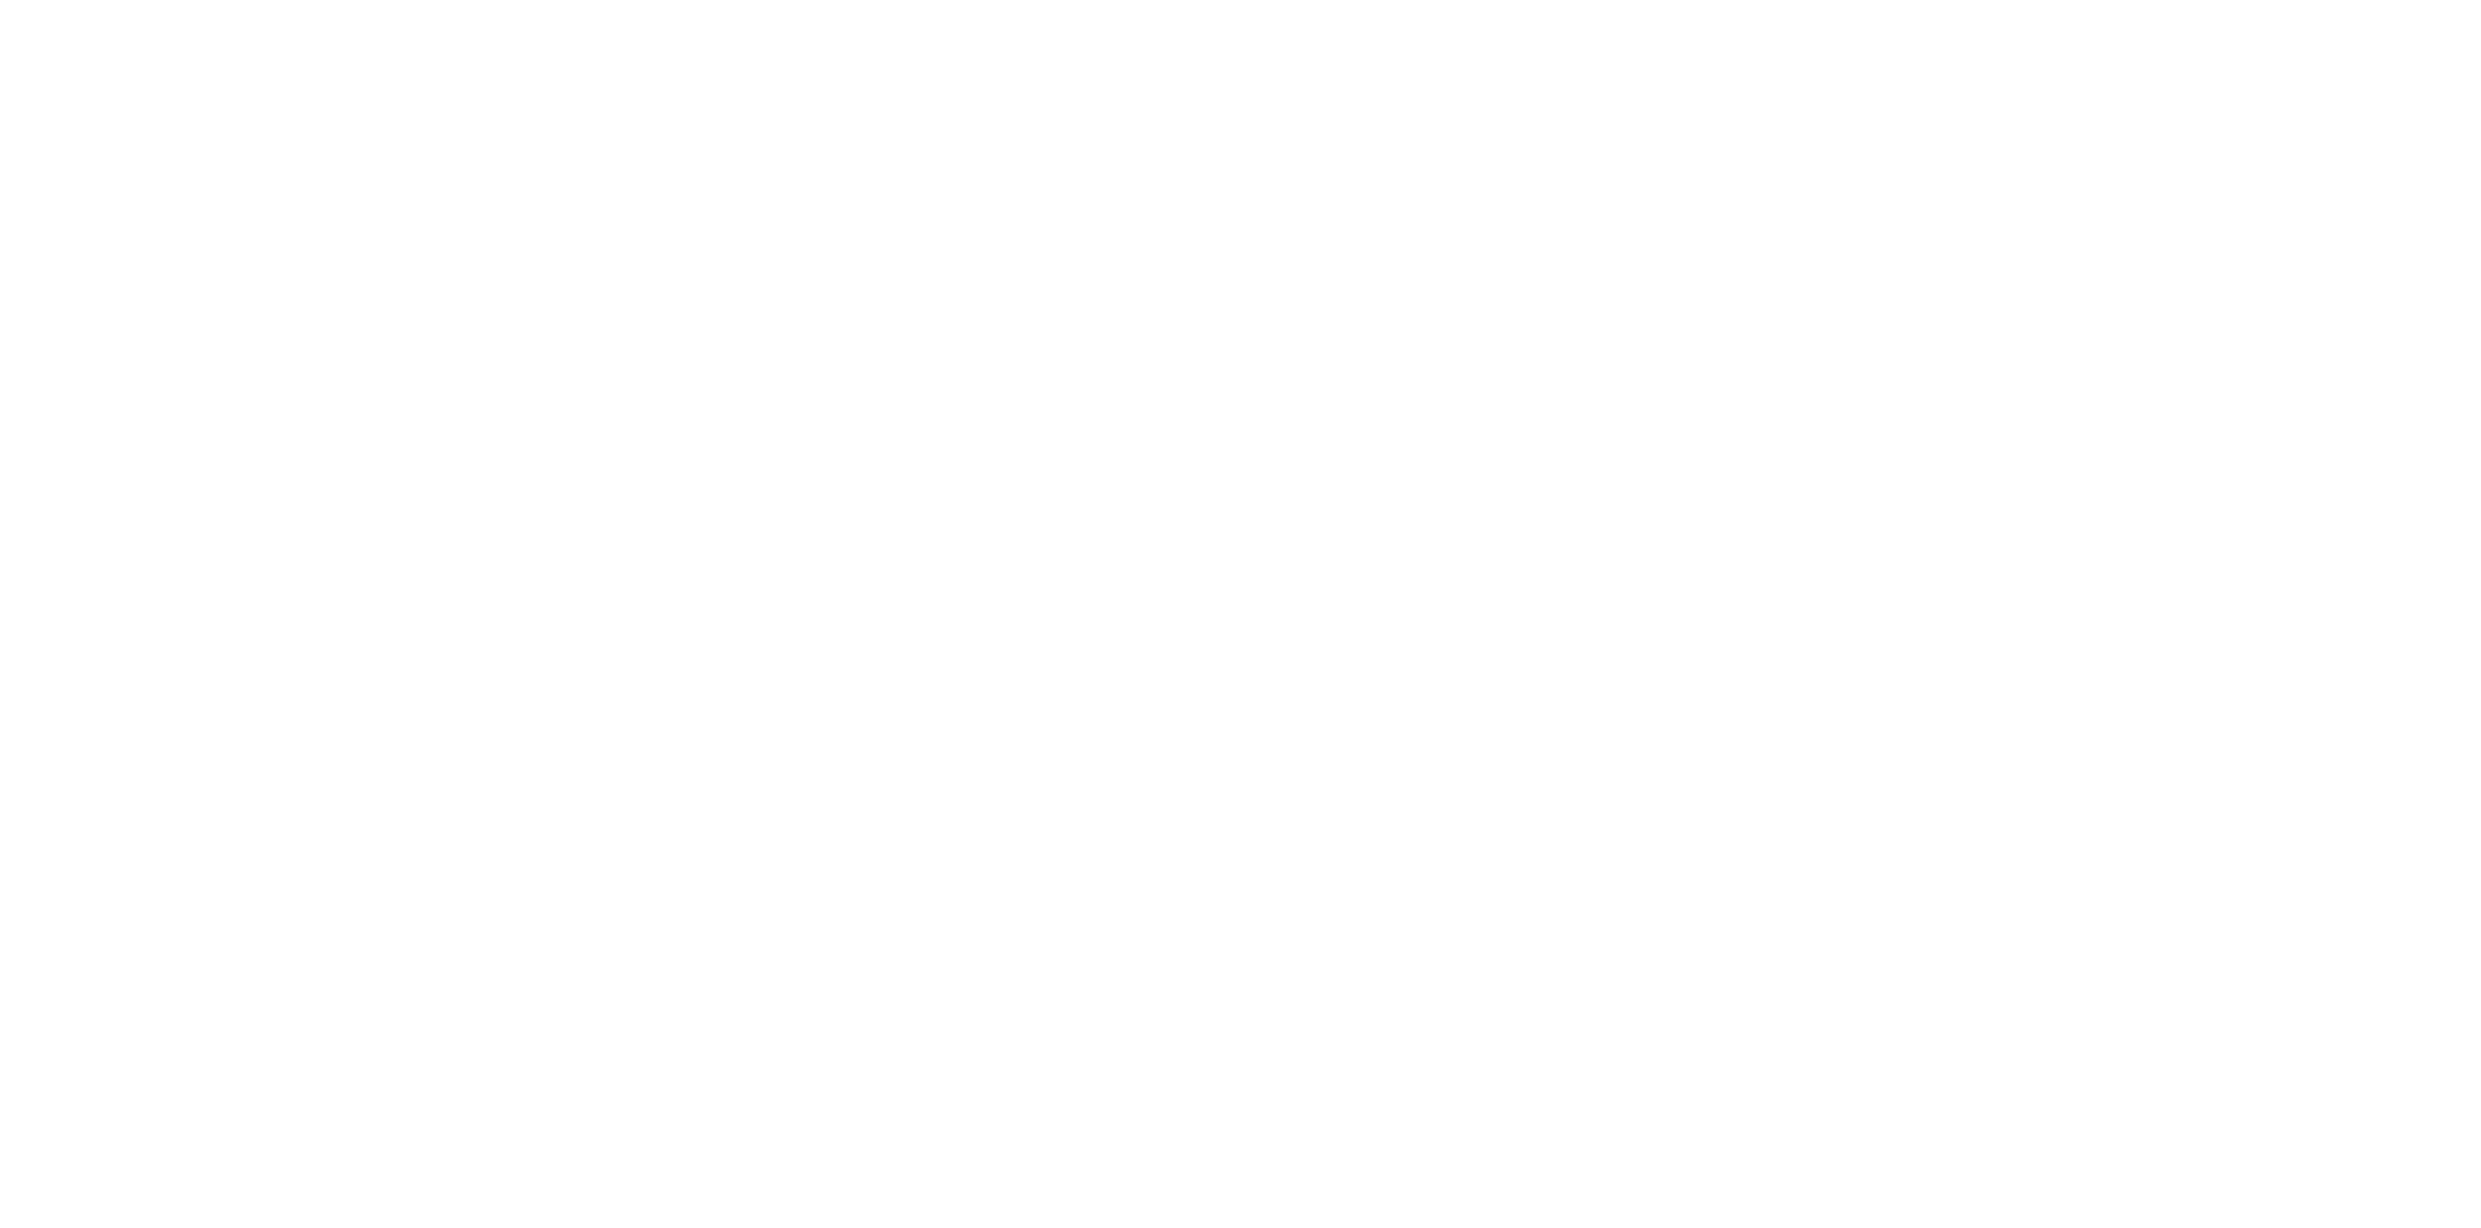 HIROBIRO WEEKEND CREATORS